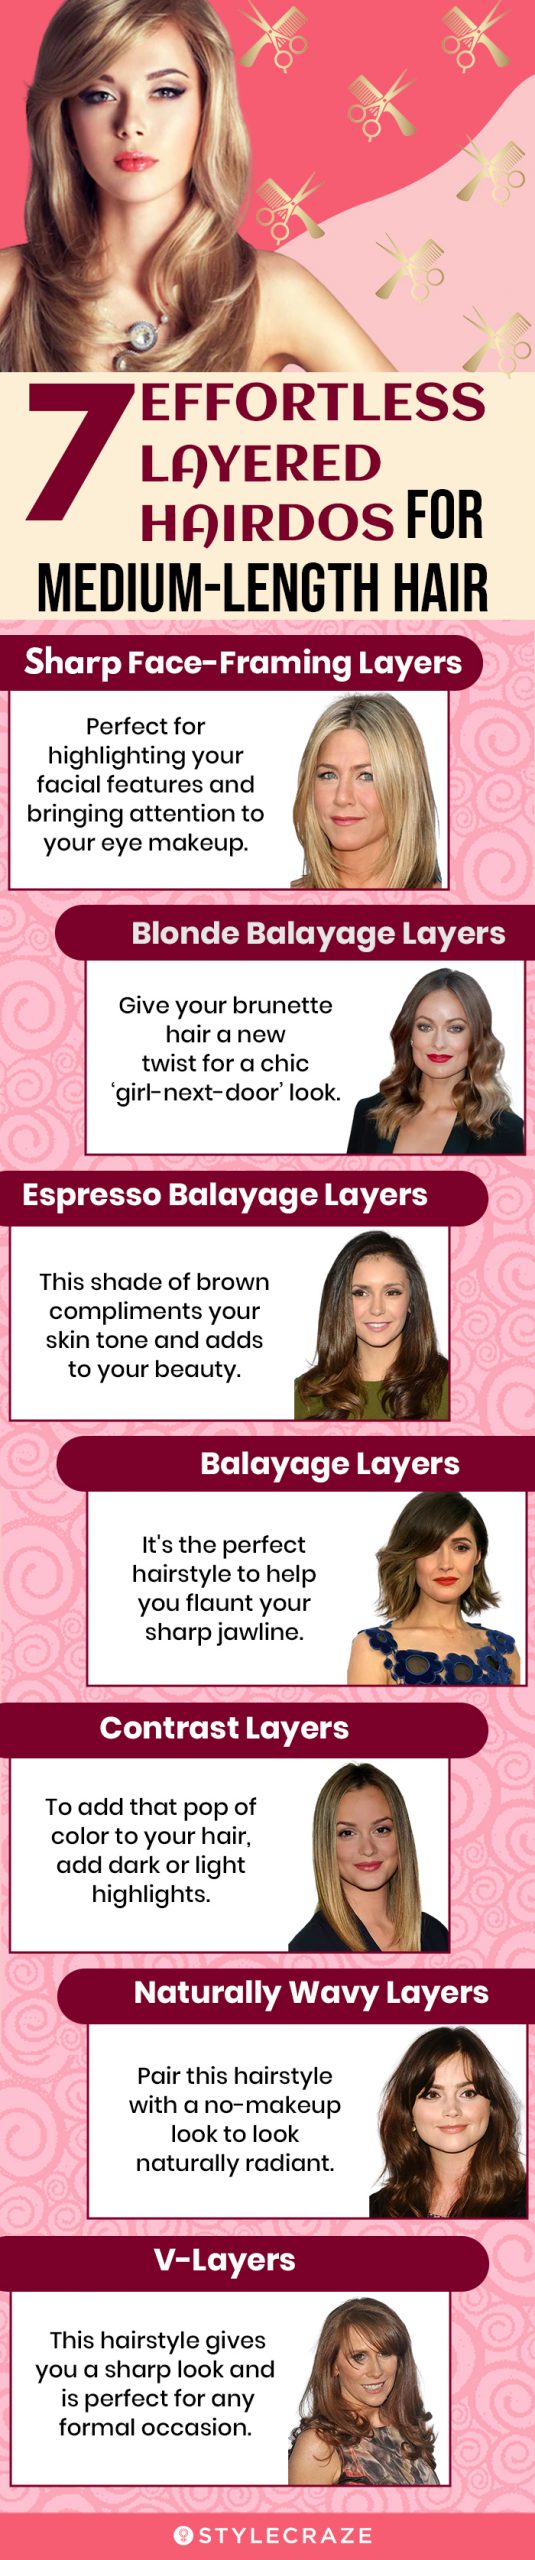 7 effortless hairdos for medium length hair (infographic)